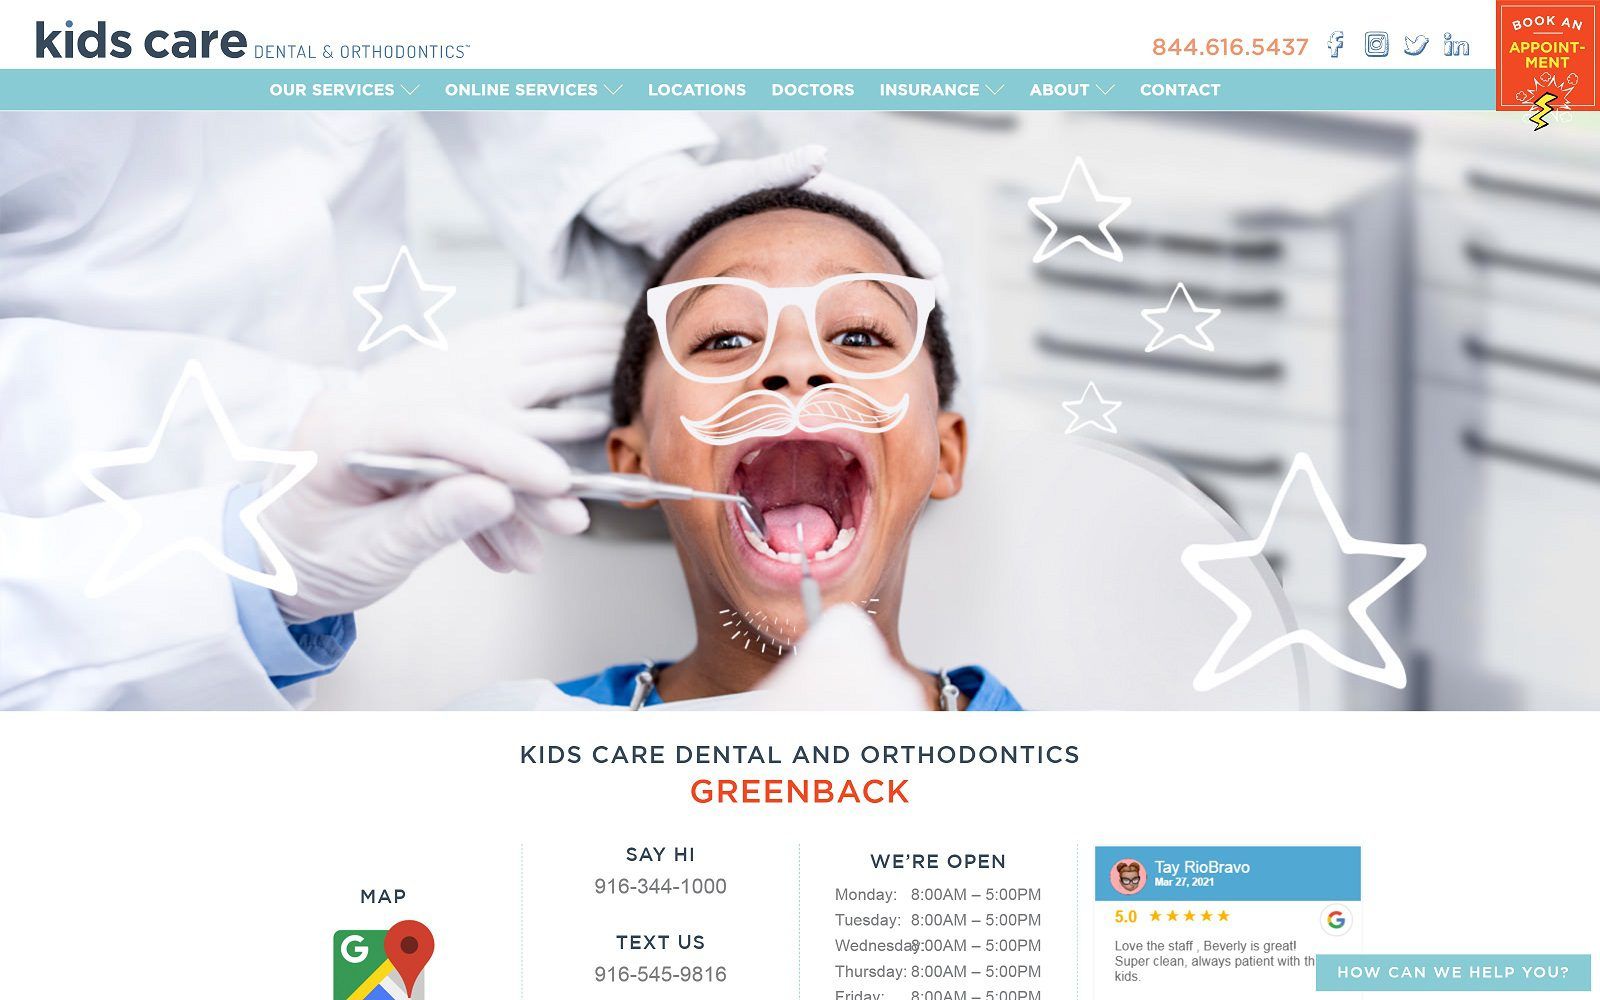 The screenshot kids care dental & orthodontics - greenback